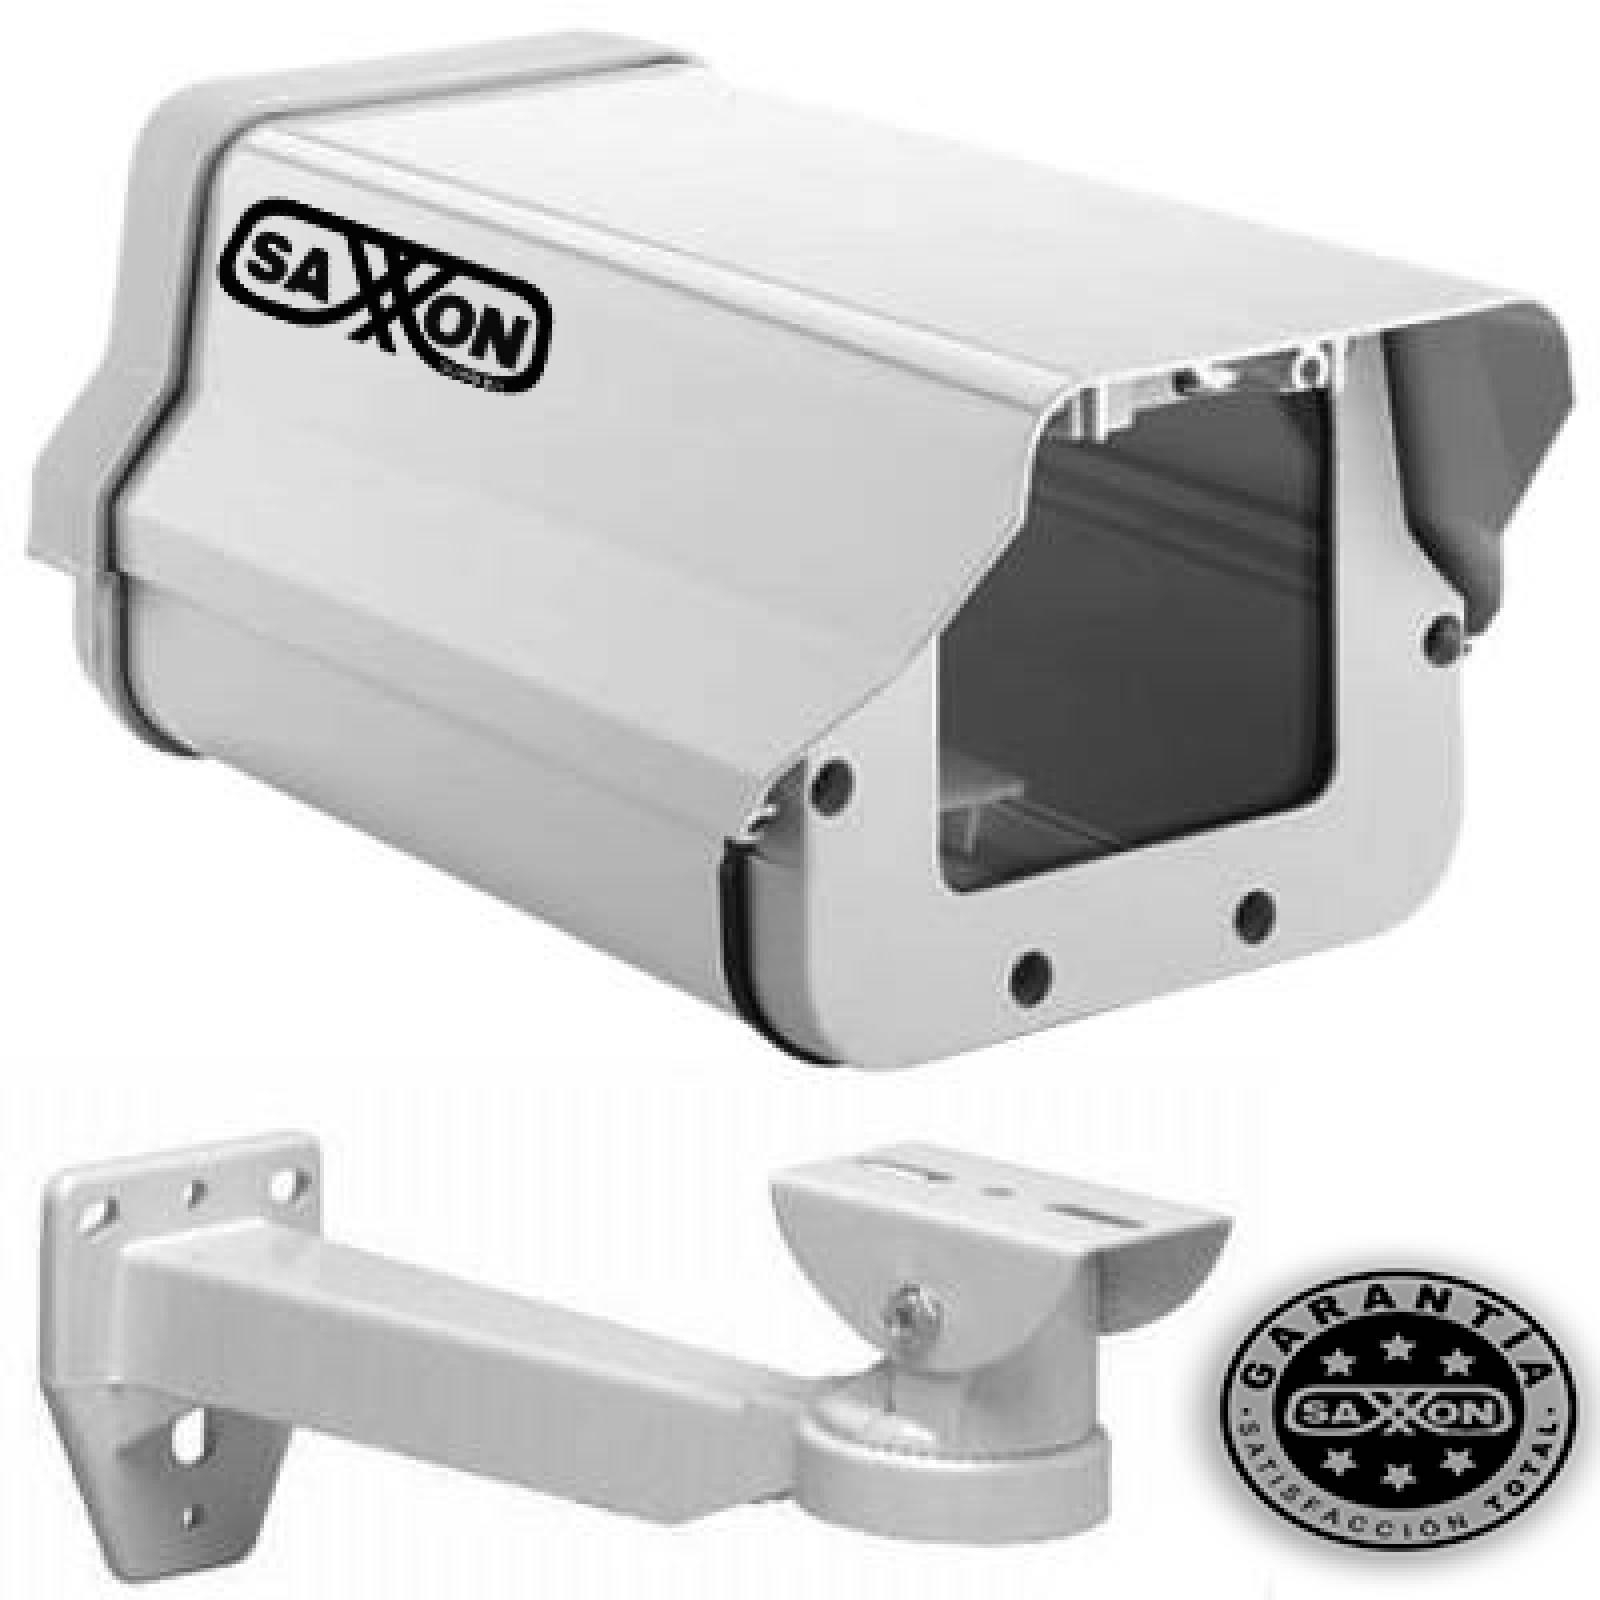 Gabinete de aluminio marca SAXXON color blanco para cámara fija. SAXXON